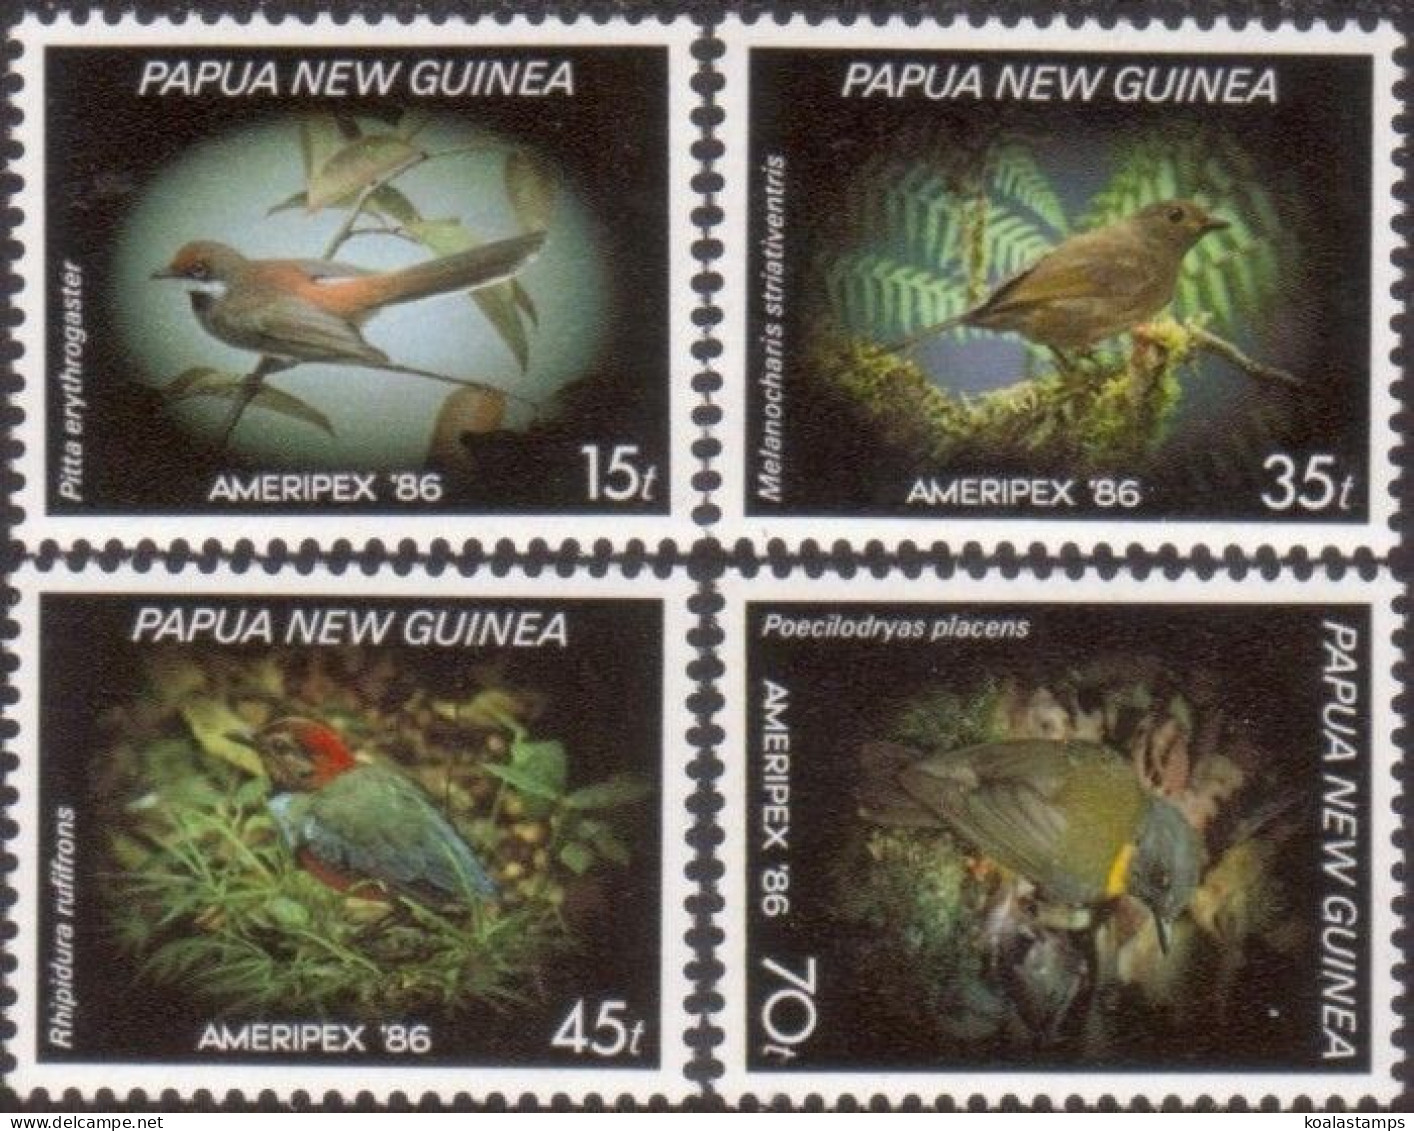 Papua New Guinea 1986 SG525 Small Birds Ameripex '86 Set MNH - Papouasie-Nouvelle-Guinée